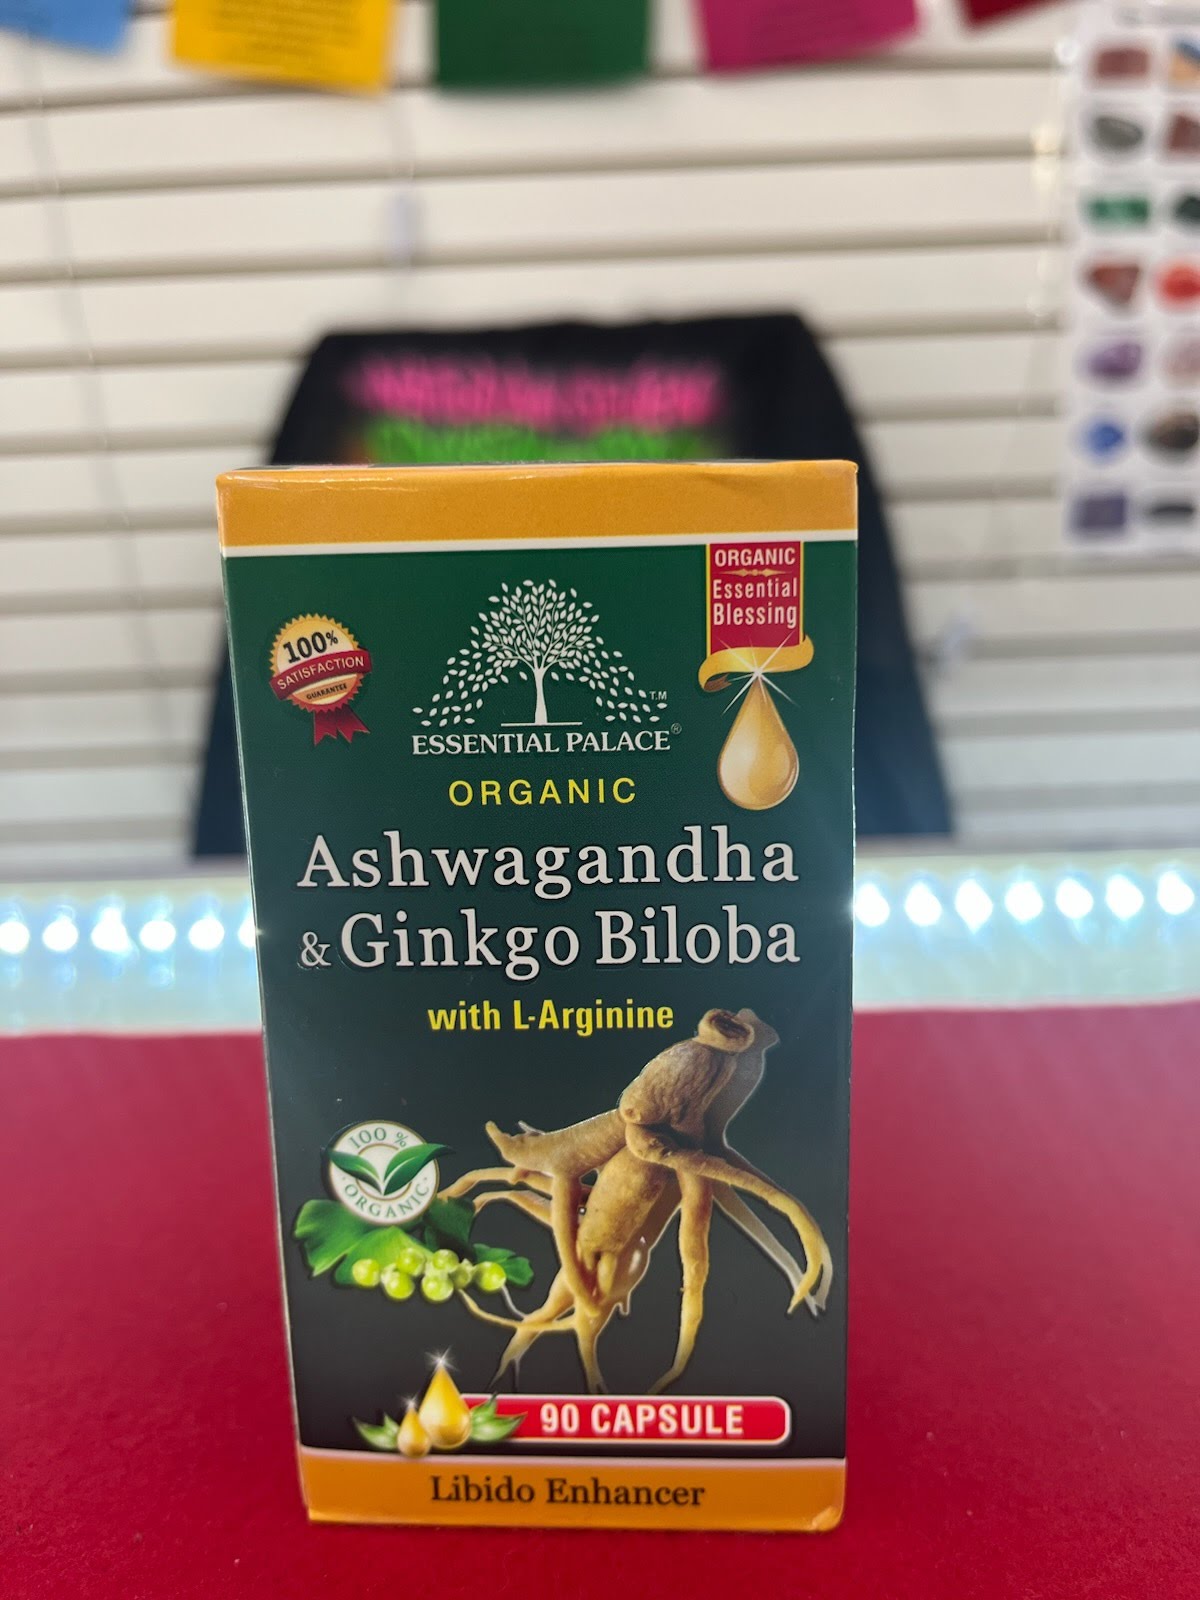 A box of ashwagandha and ginkgo biloba with l-arginine.